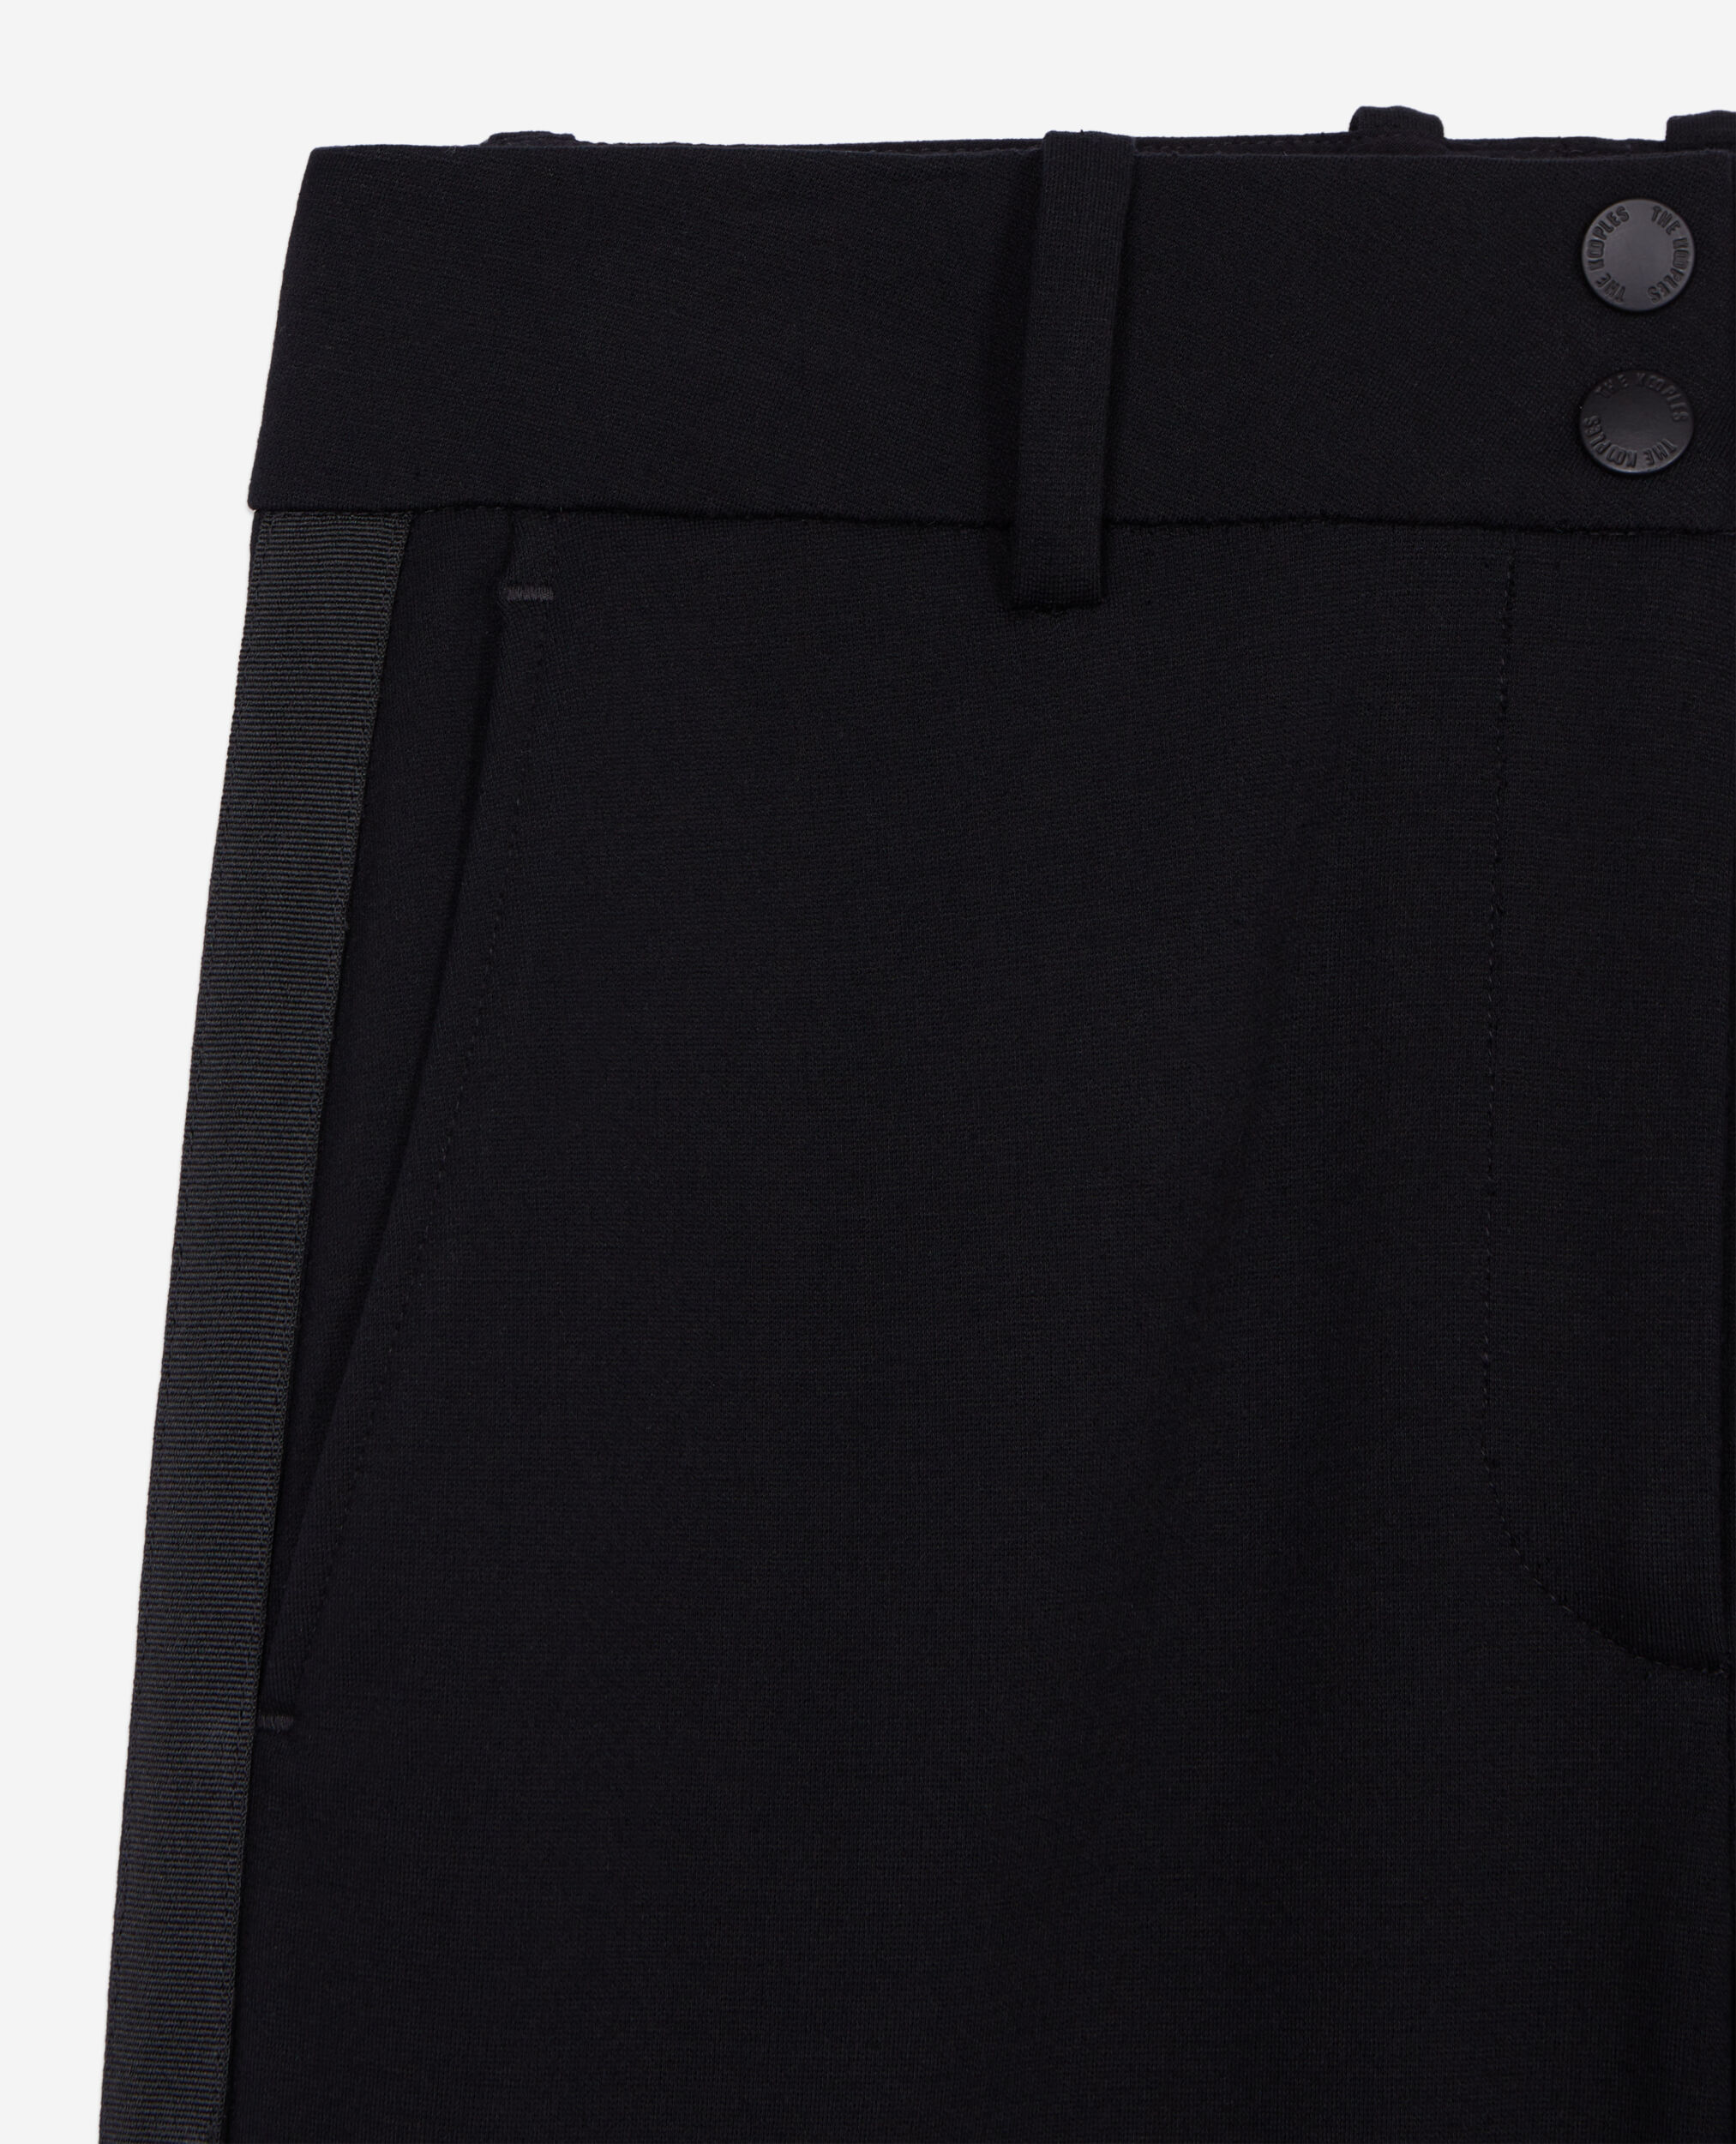 Pantalón traje negro recto grogrén, BLACK, hi-res image number null